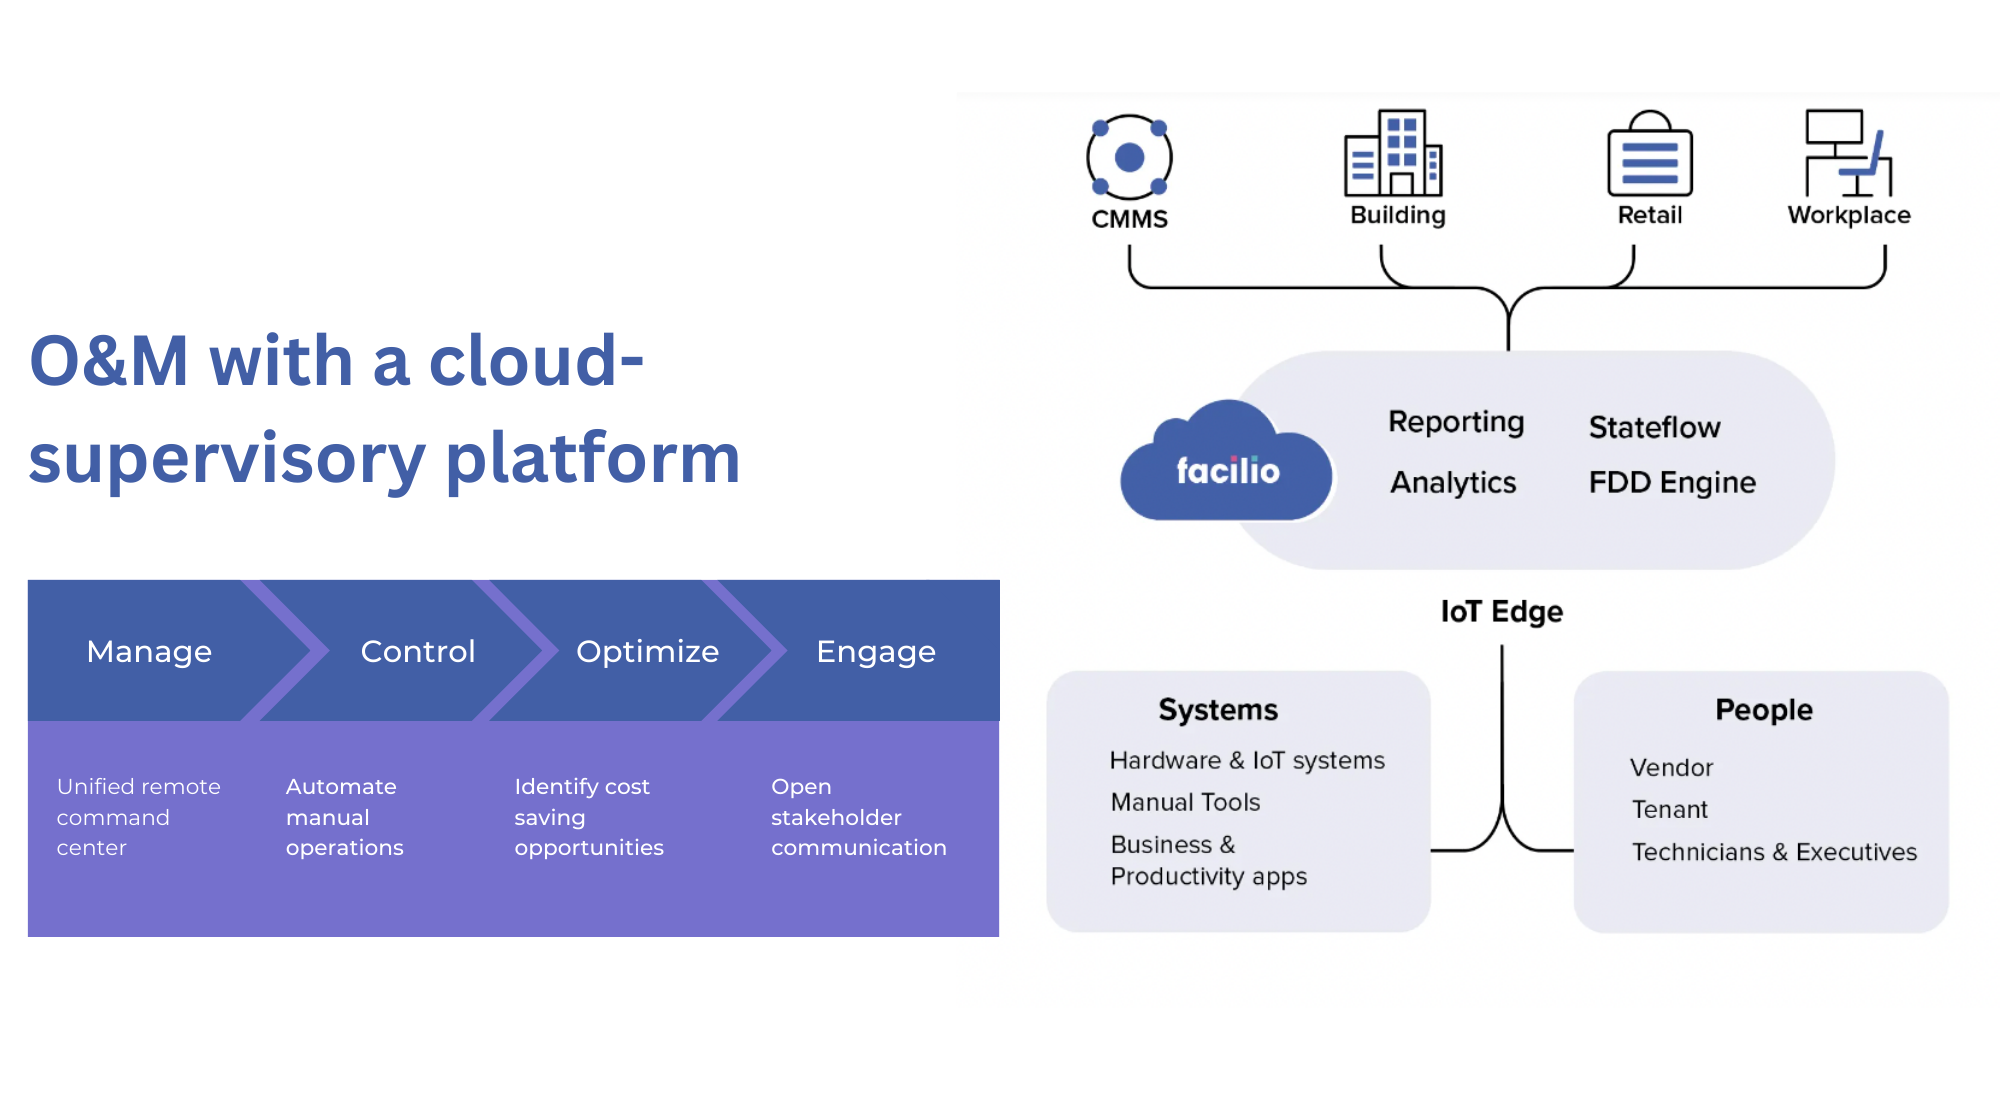 O&M with a cloud supervisory platform